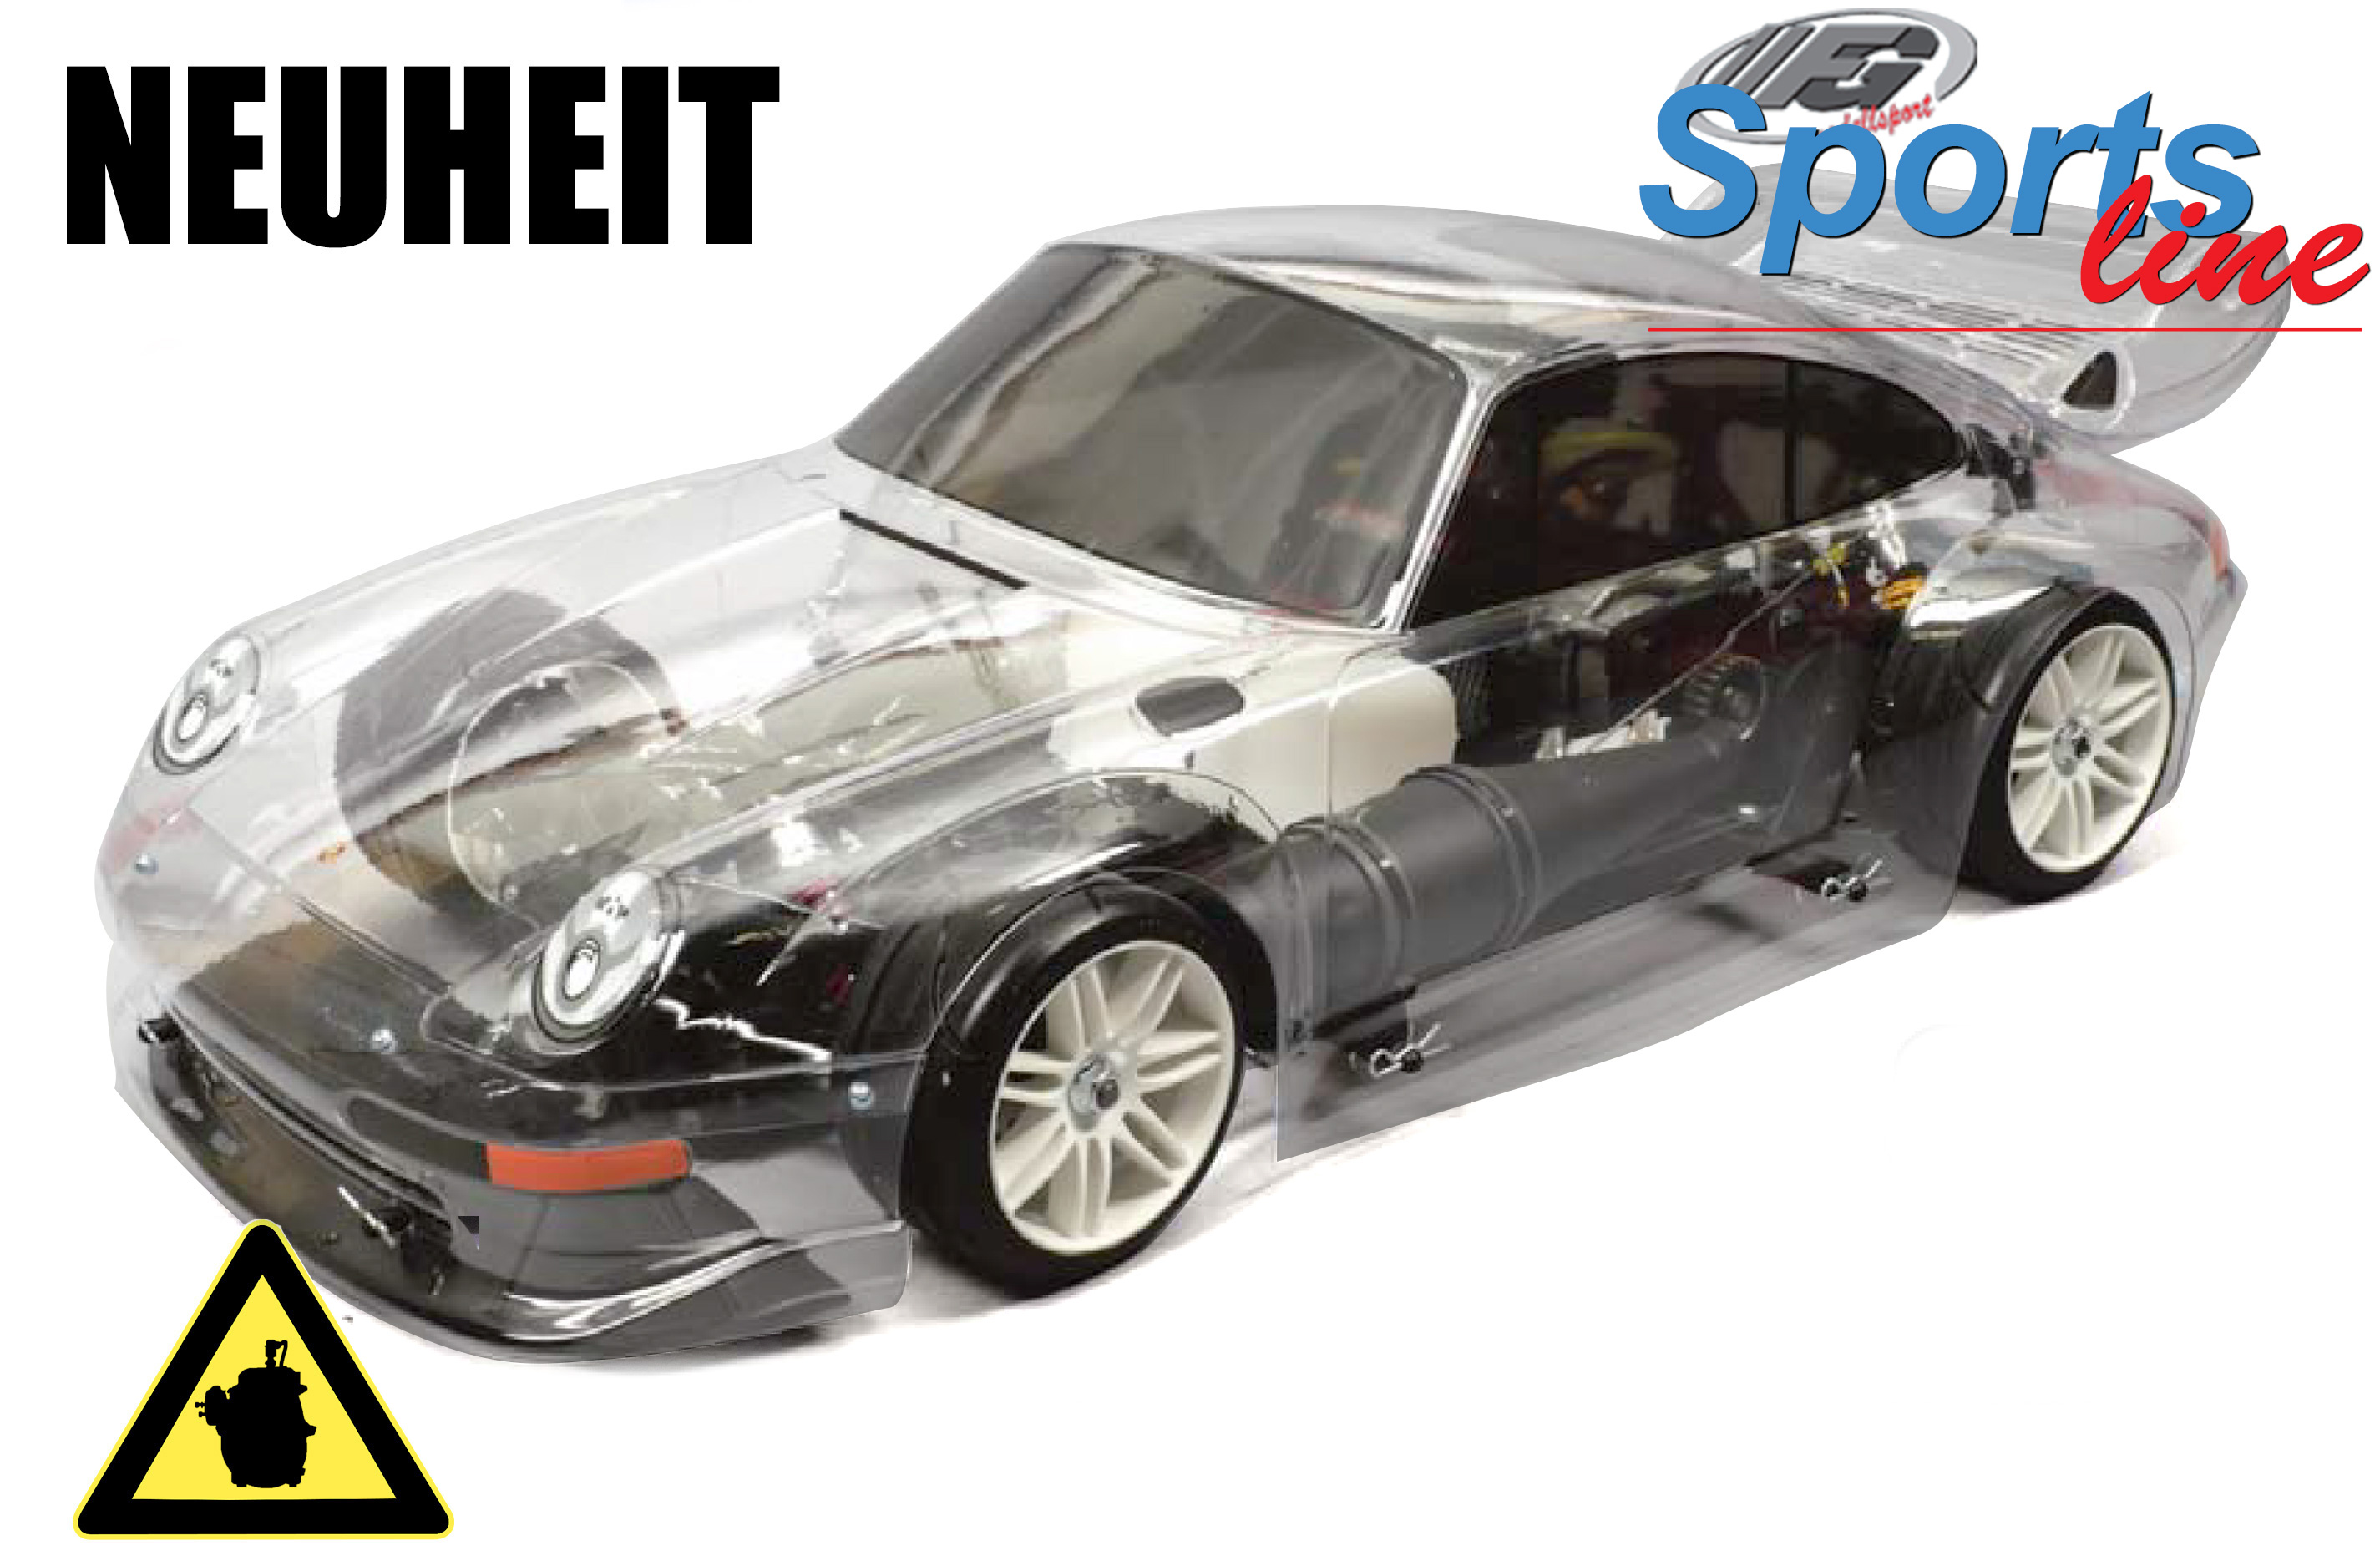 FG Sportsline with Porsche GT2 body shell 465 mm Wheelbase, 23cm³ Engine